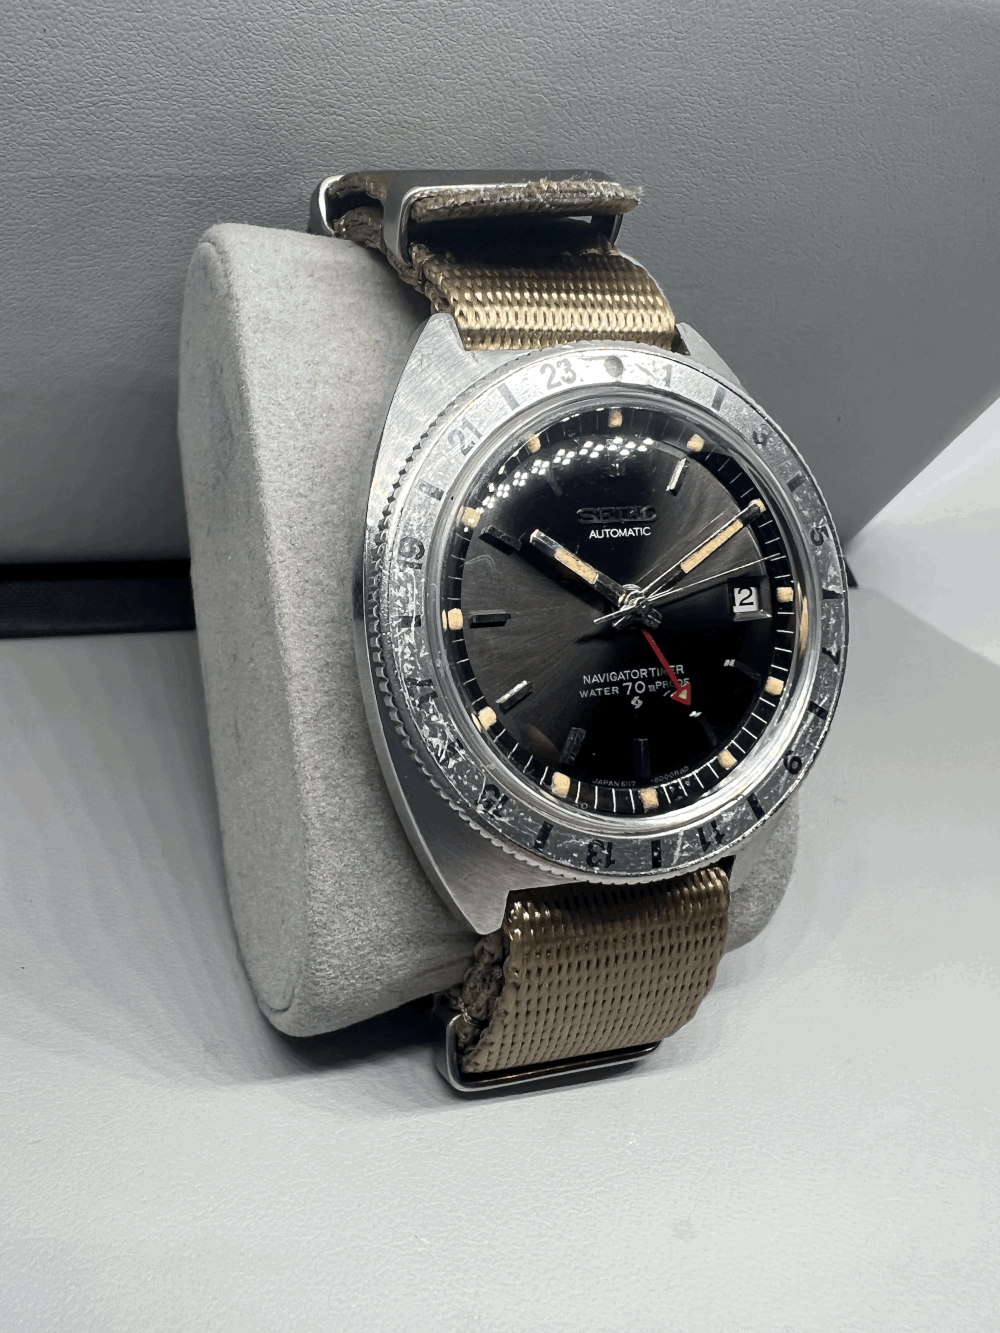 SEIKO 6117-8009 Navigator Timer — Thompson Watch Repair